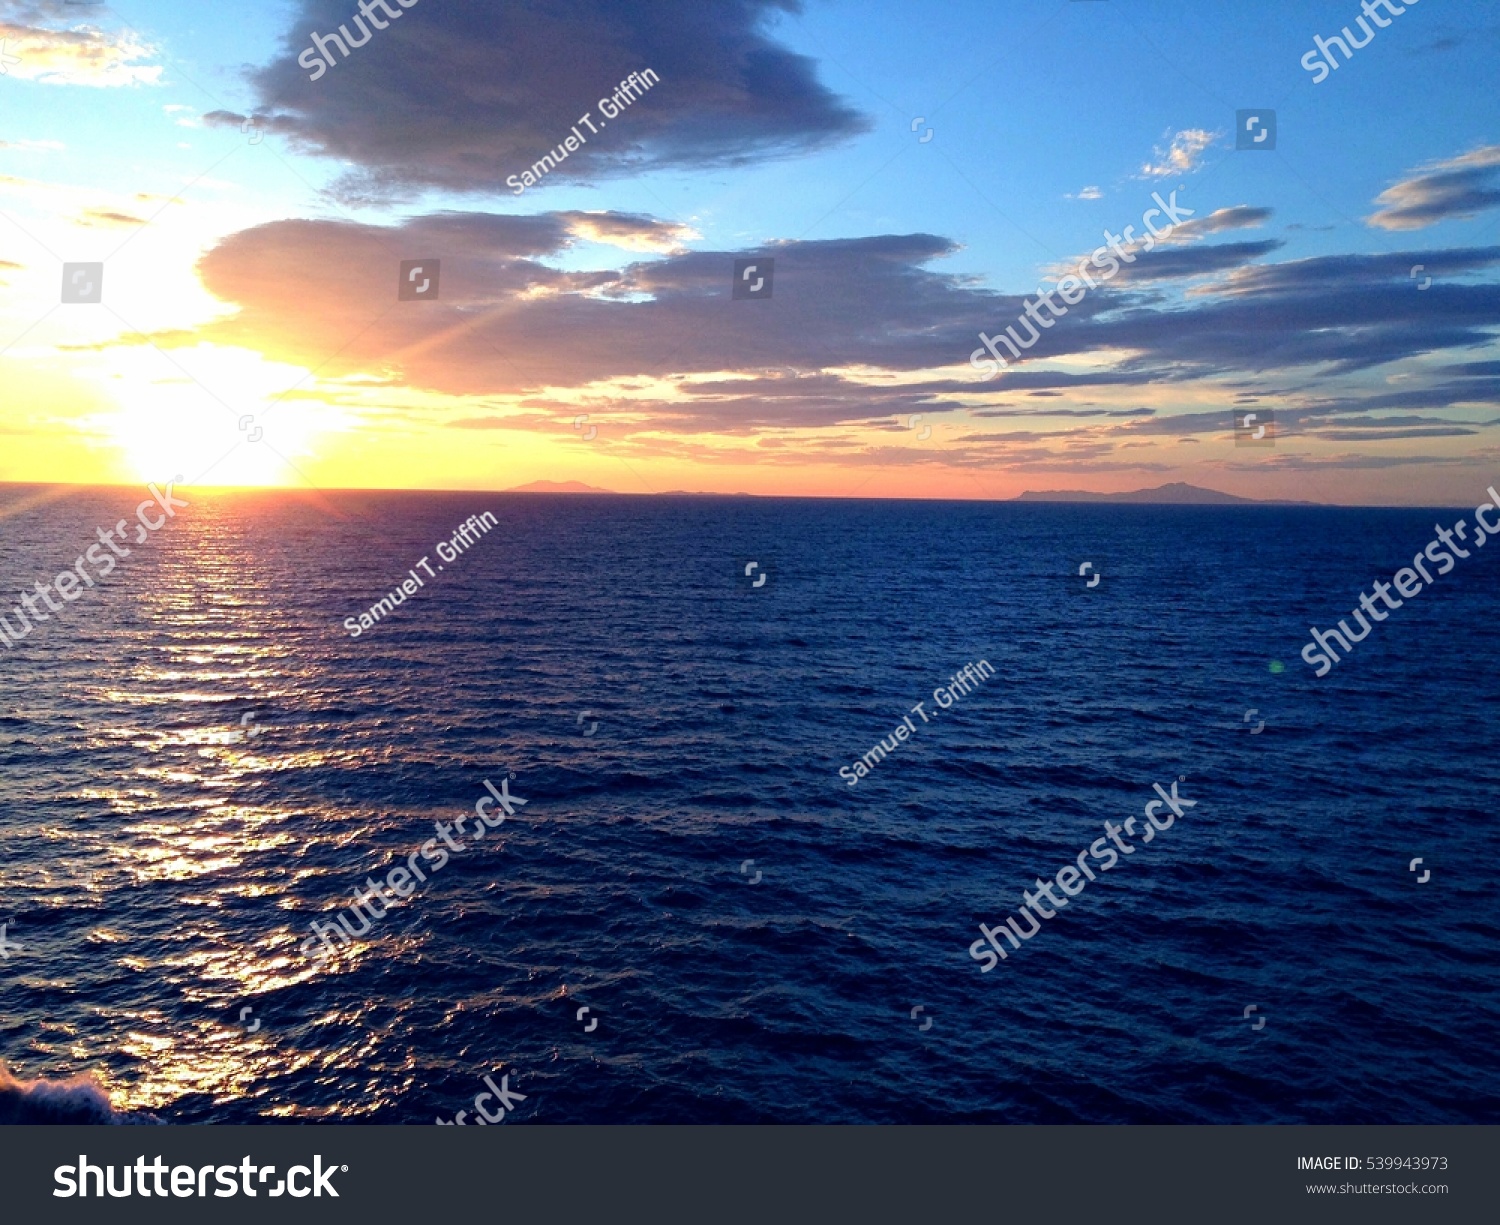 Sunset Over the Ocean #539943973